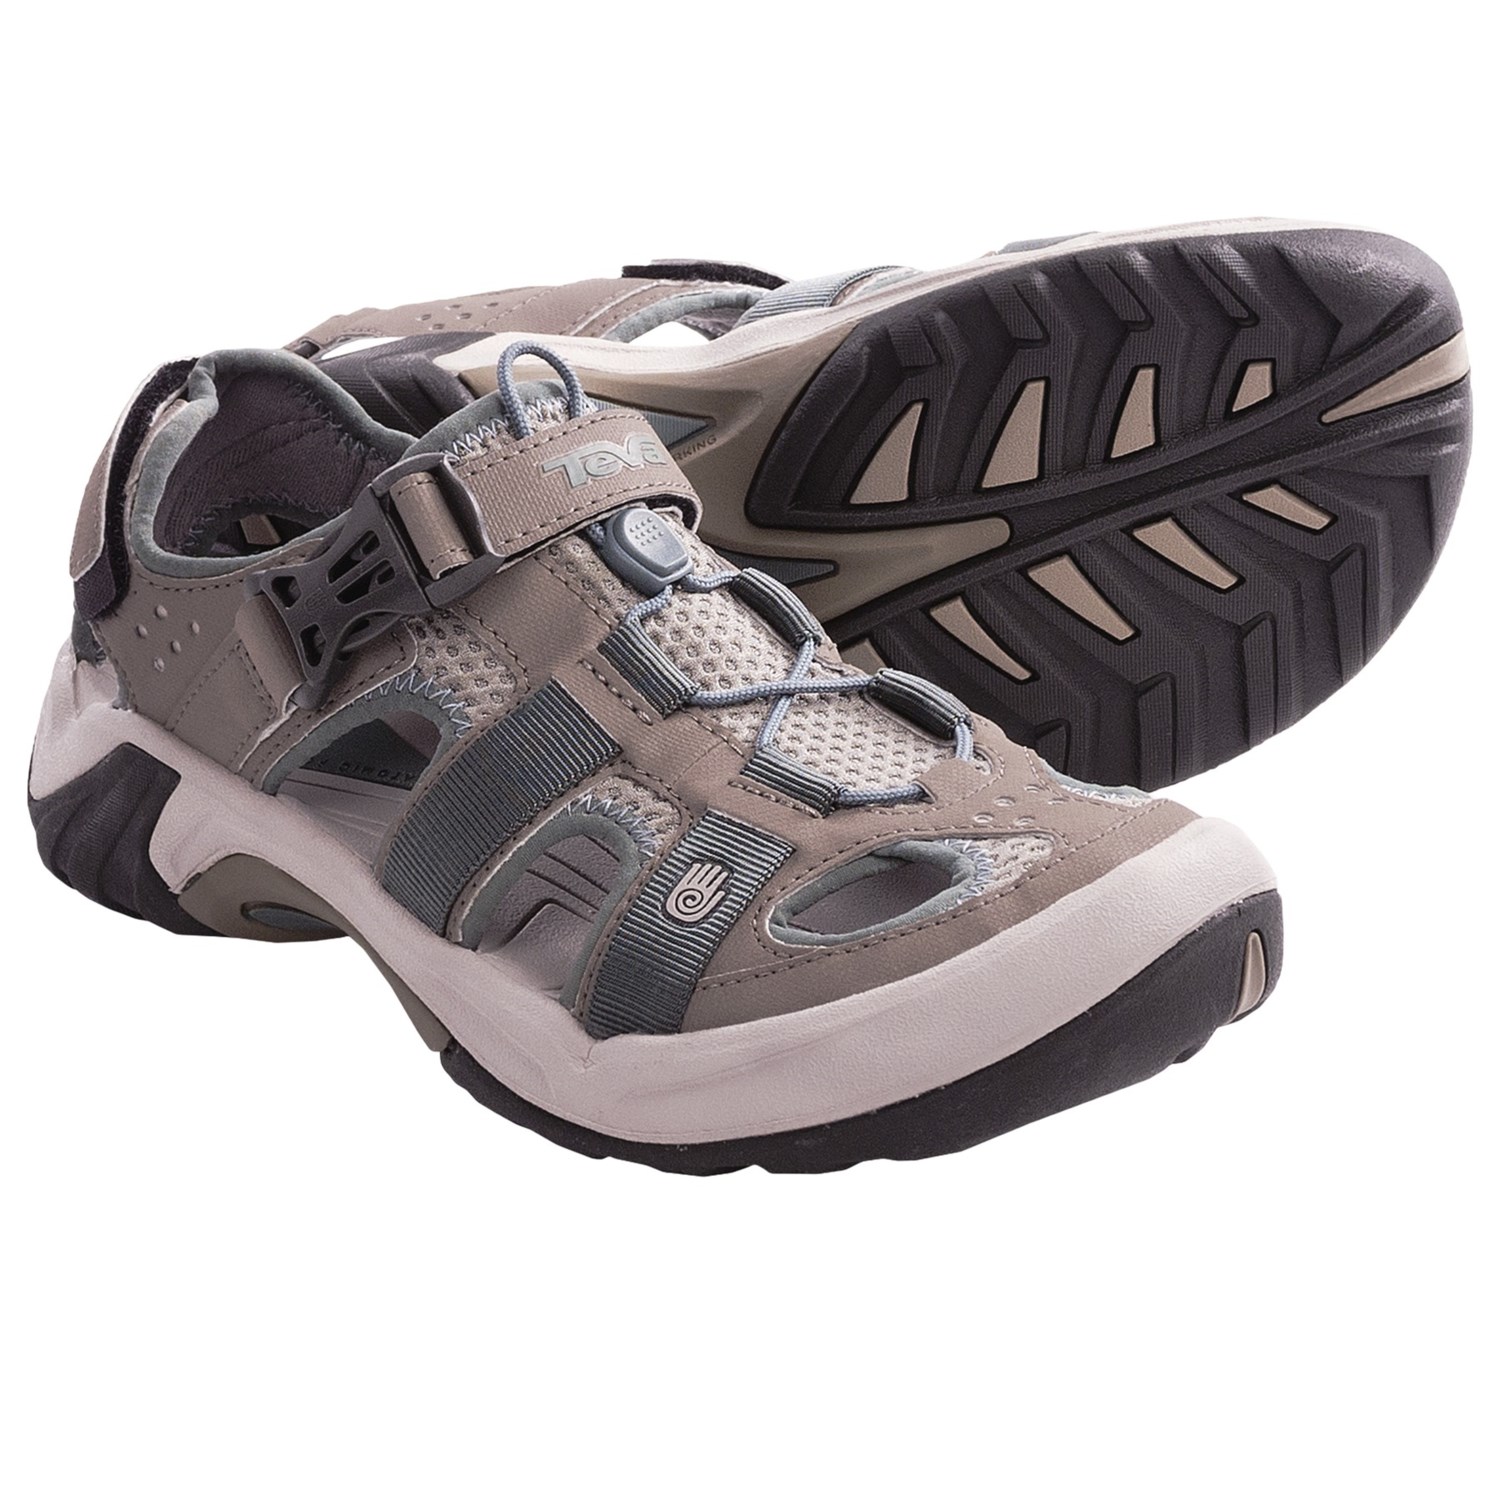 Teva Omnium Sport Sandals (For Women) - Save 30%